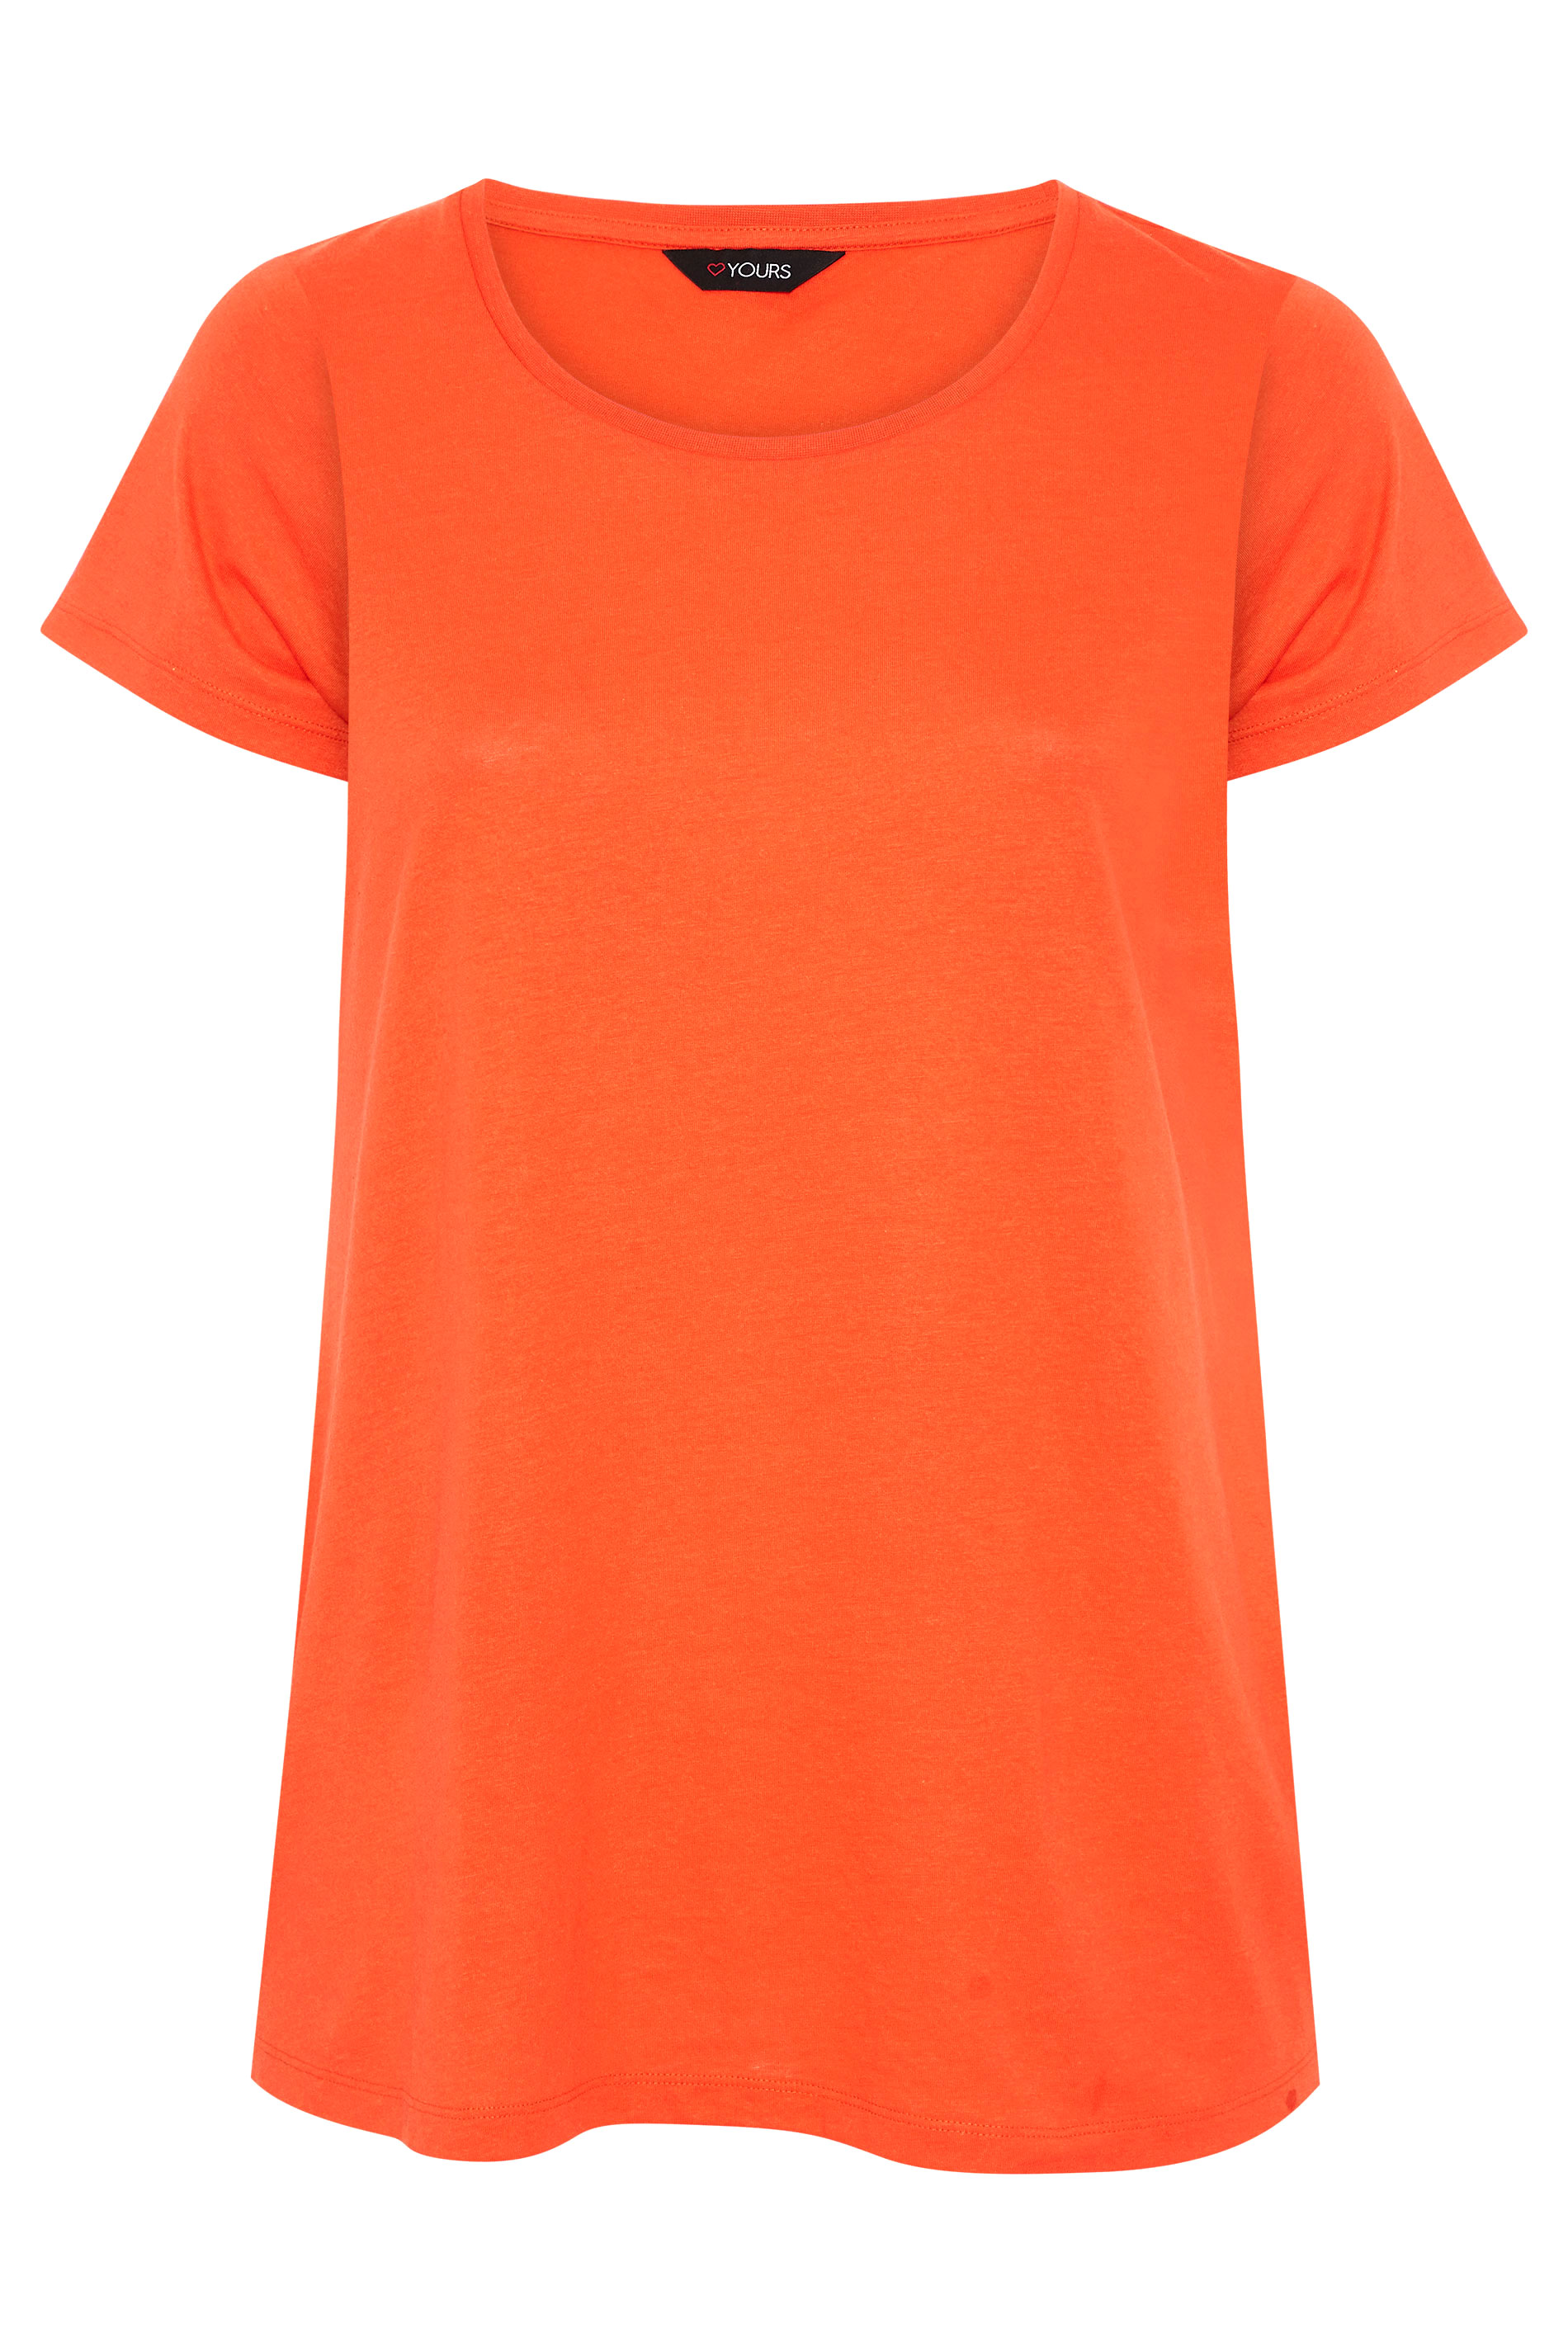 orange and brown graphic tee shirt